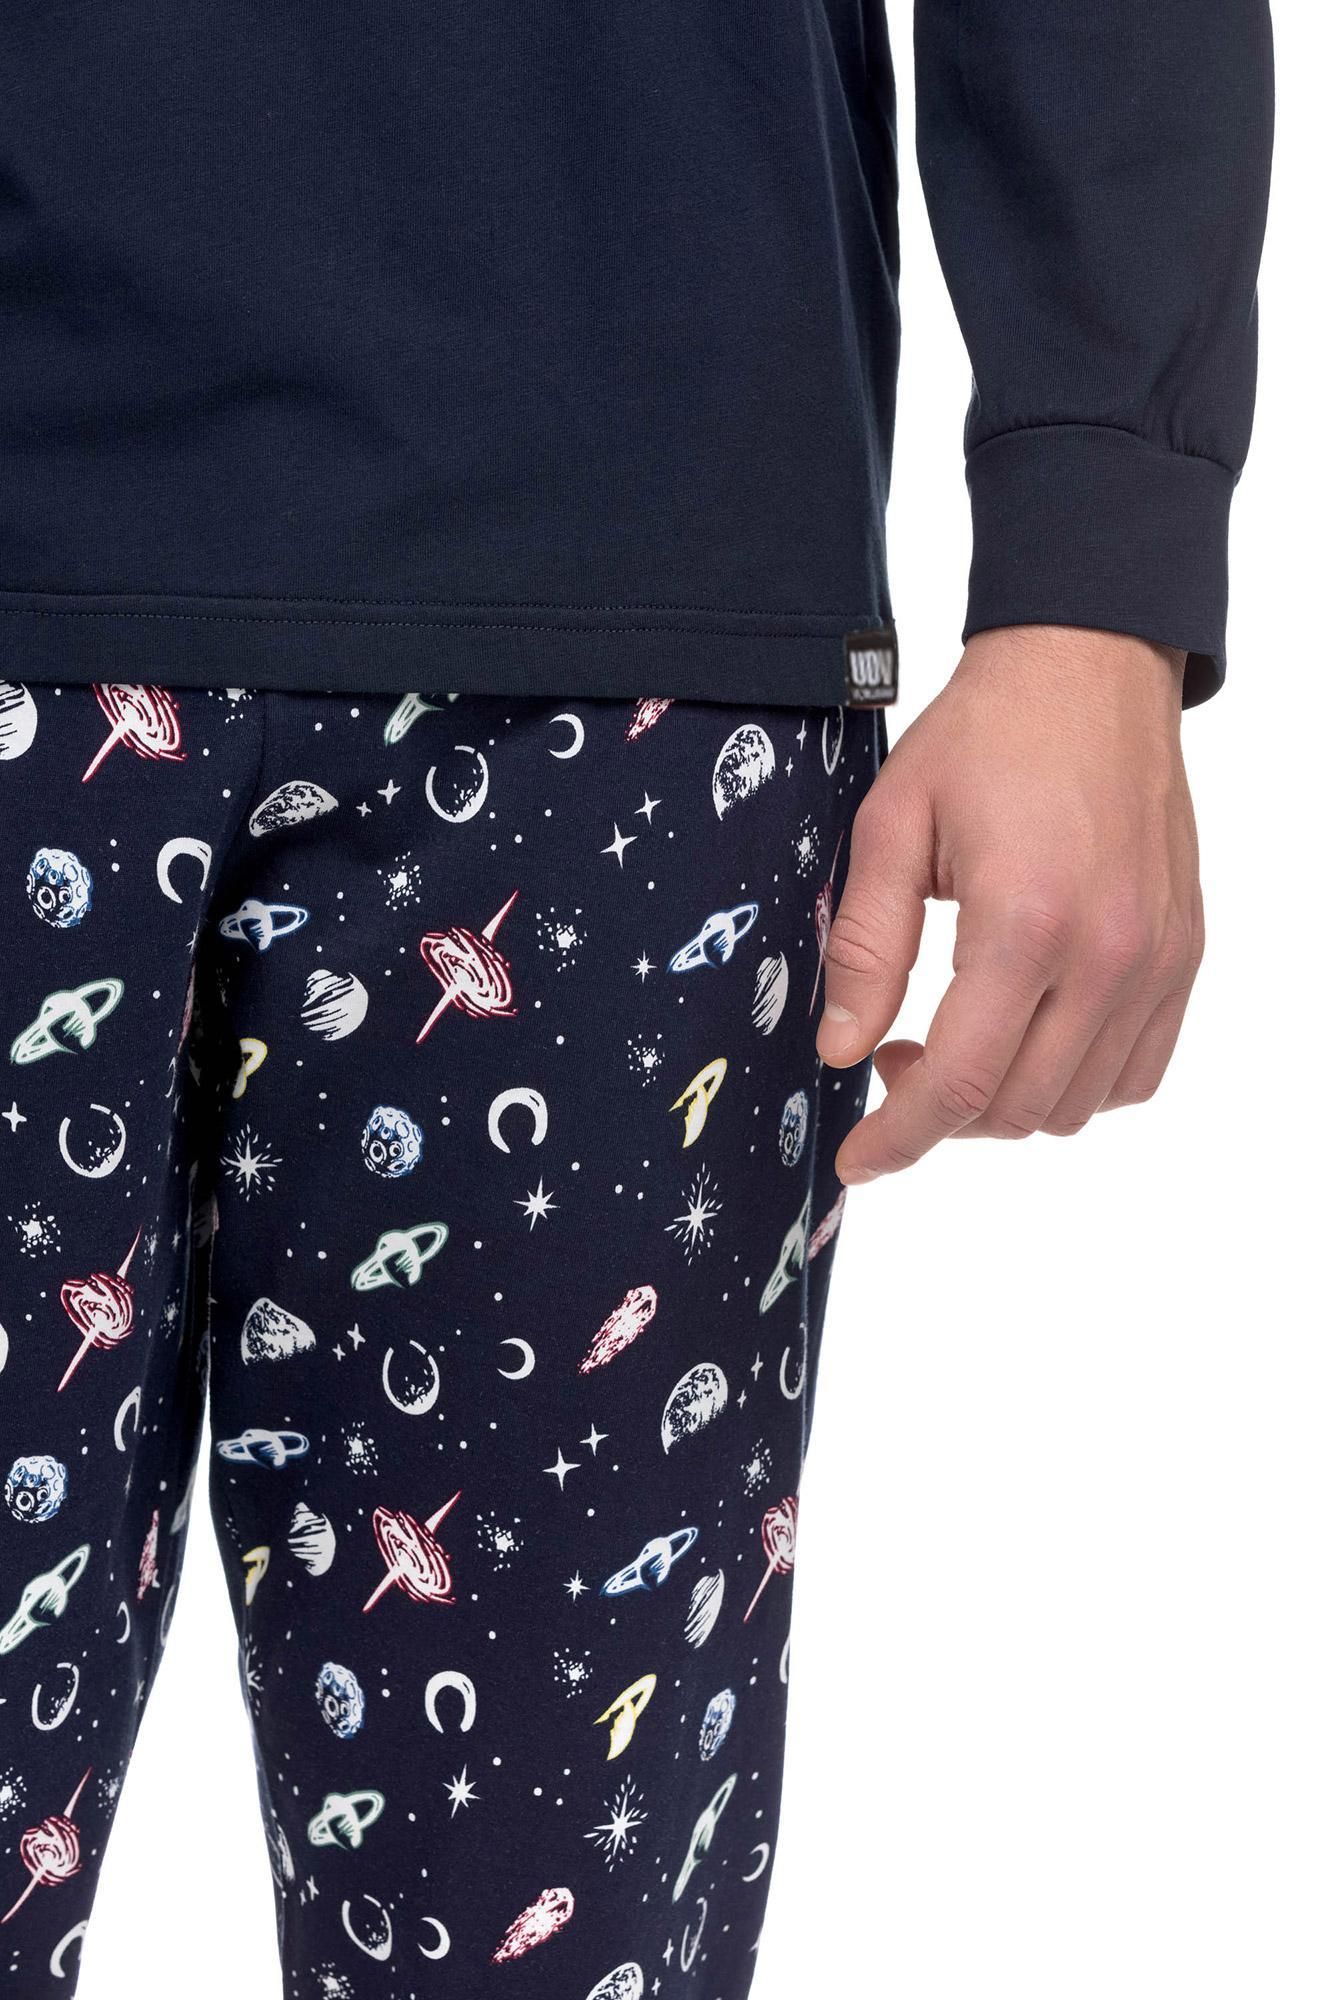 Men’s Pyjamas with planets